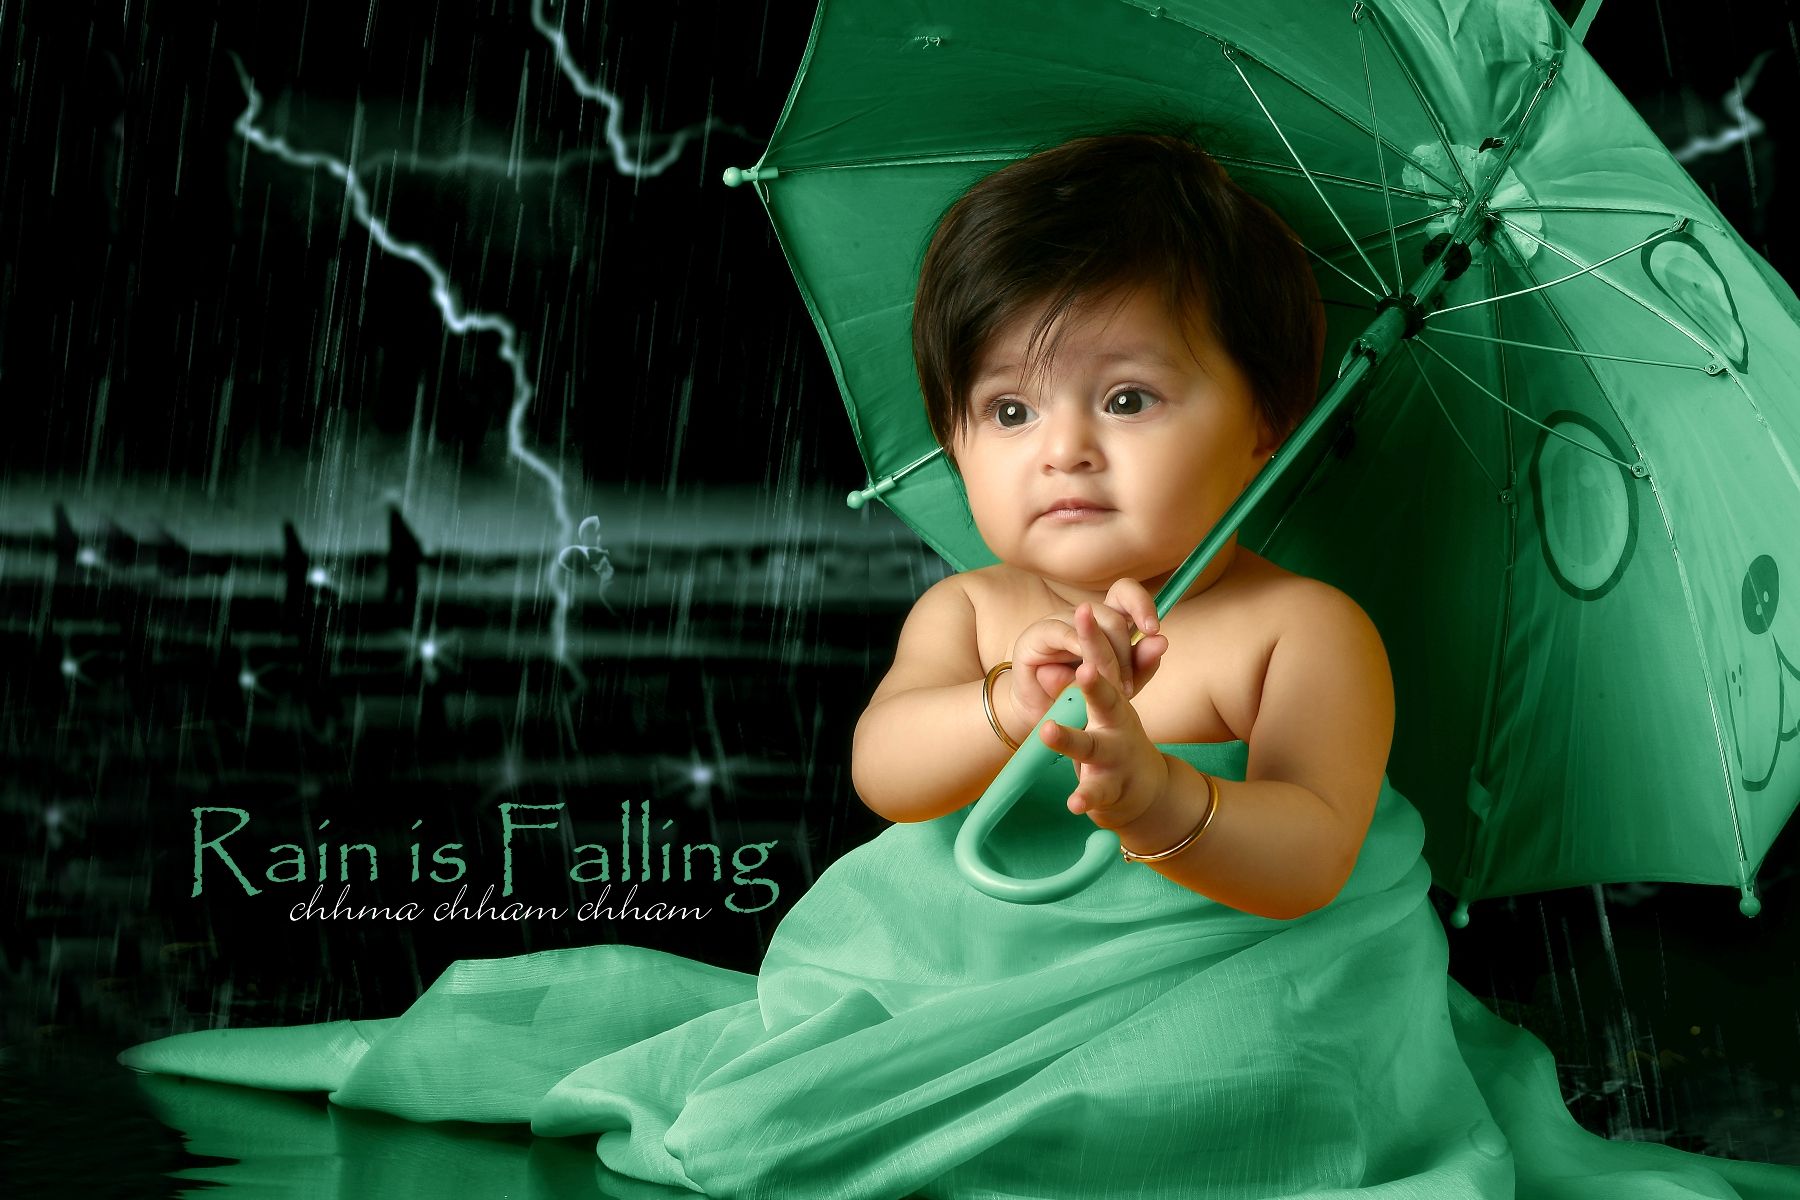 baby doll wallpaper free download,green,child,umbrella,skin,organism